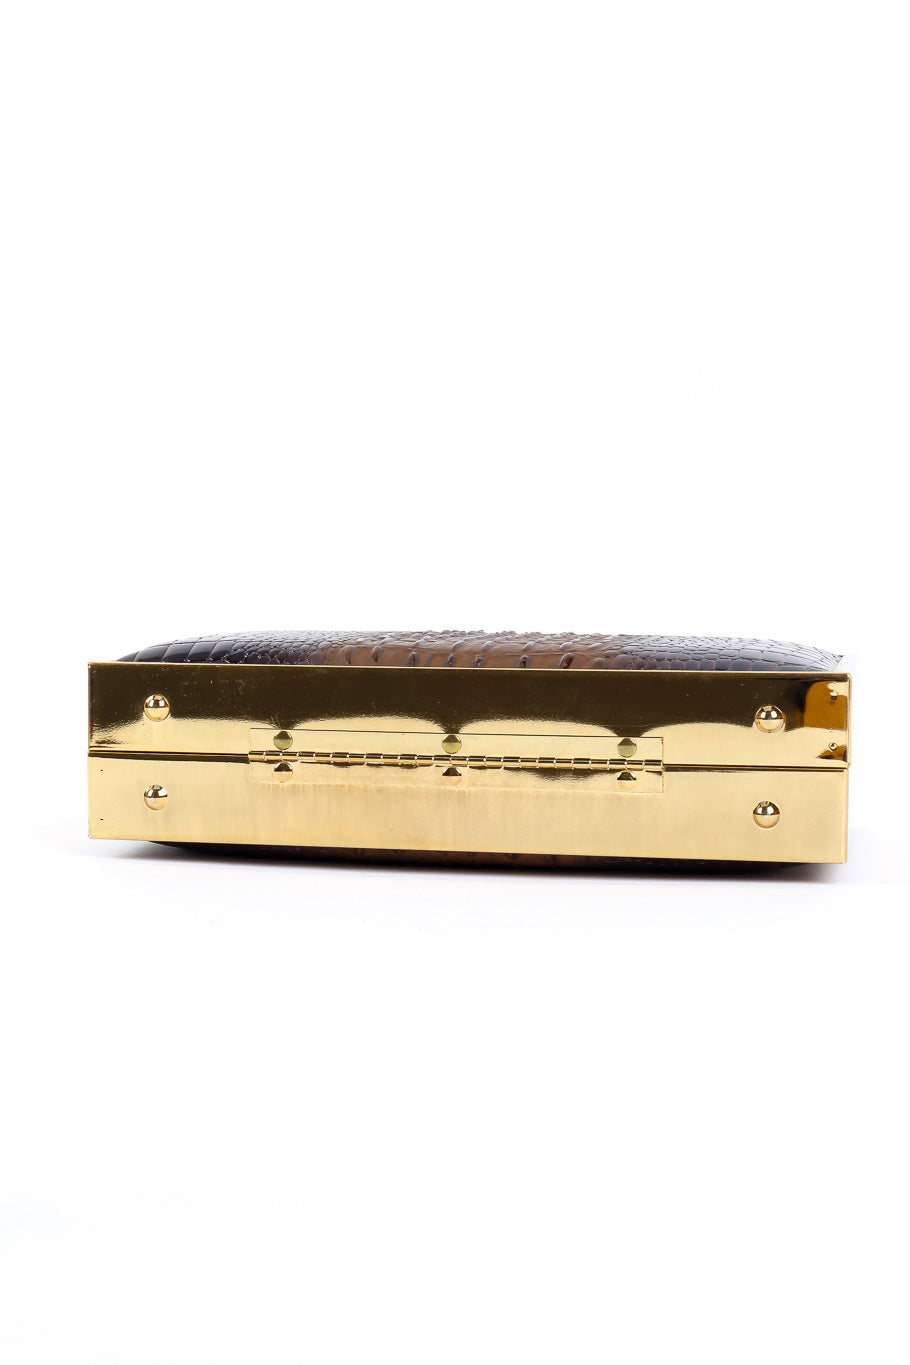 Lou Taylor gold frame box purse bottom detail @recessla